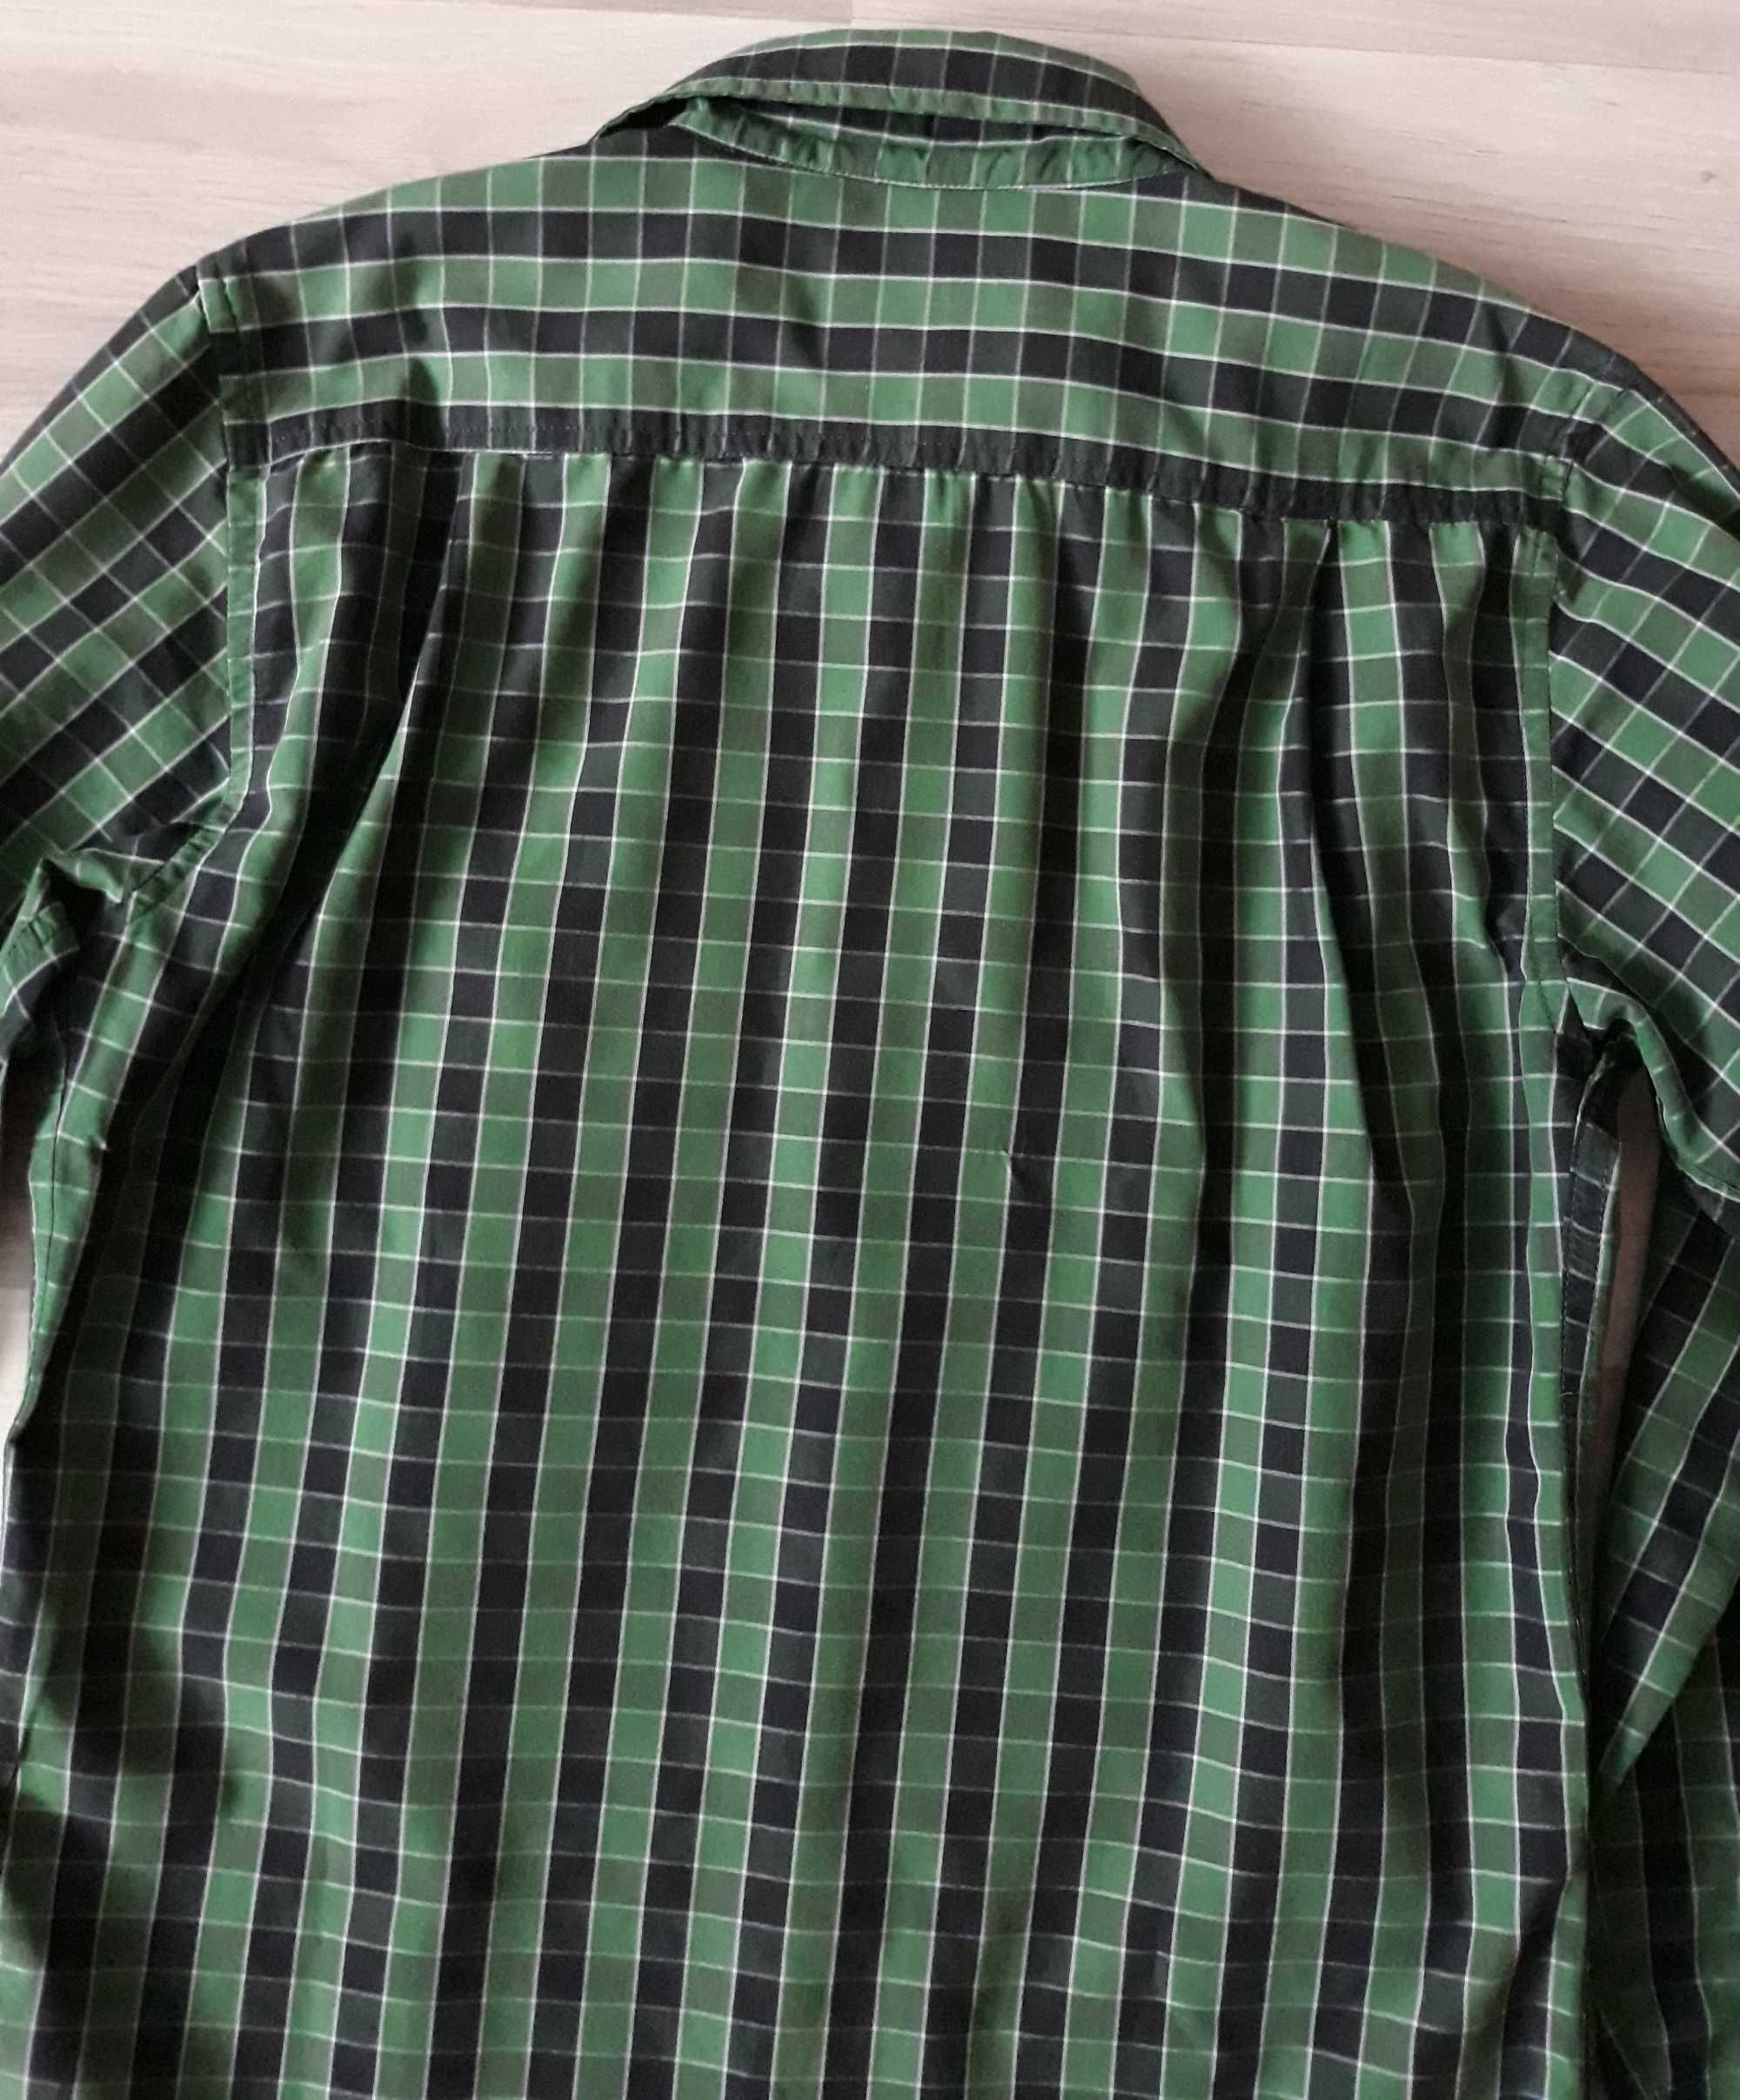 Matix koszula butelkowa zieleń w kratkę XS